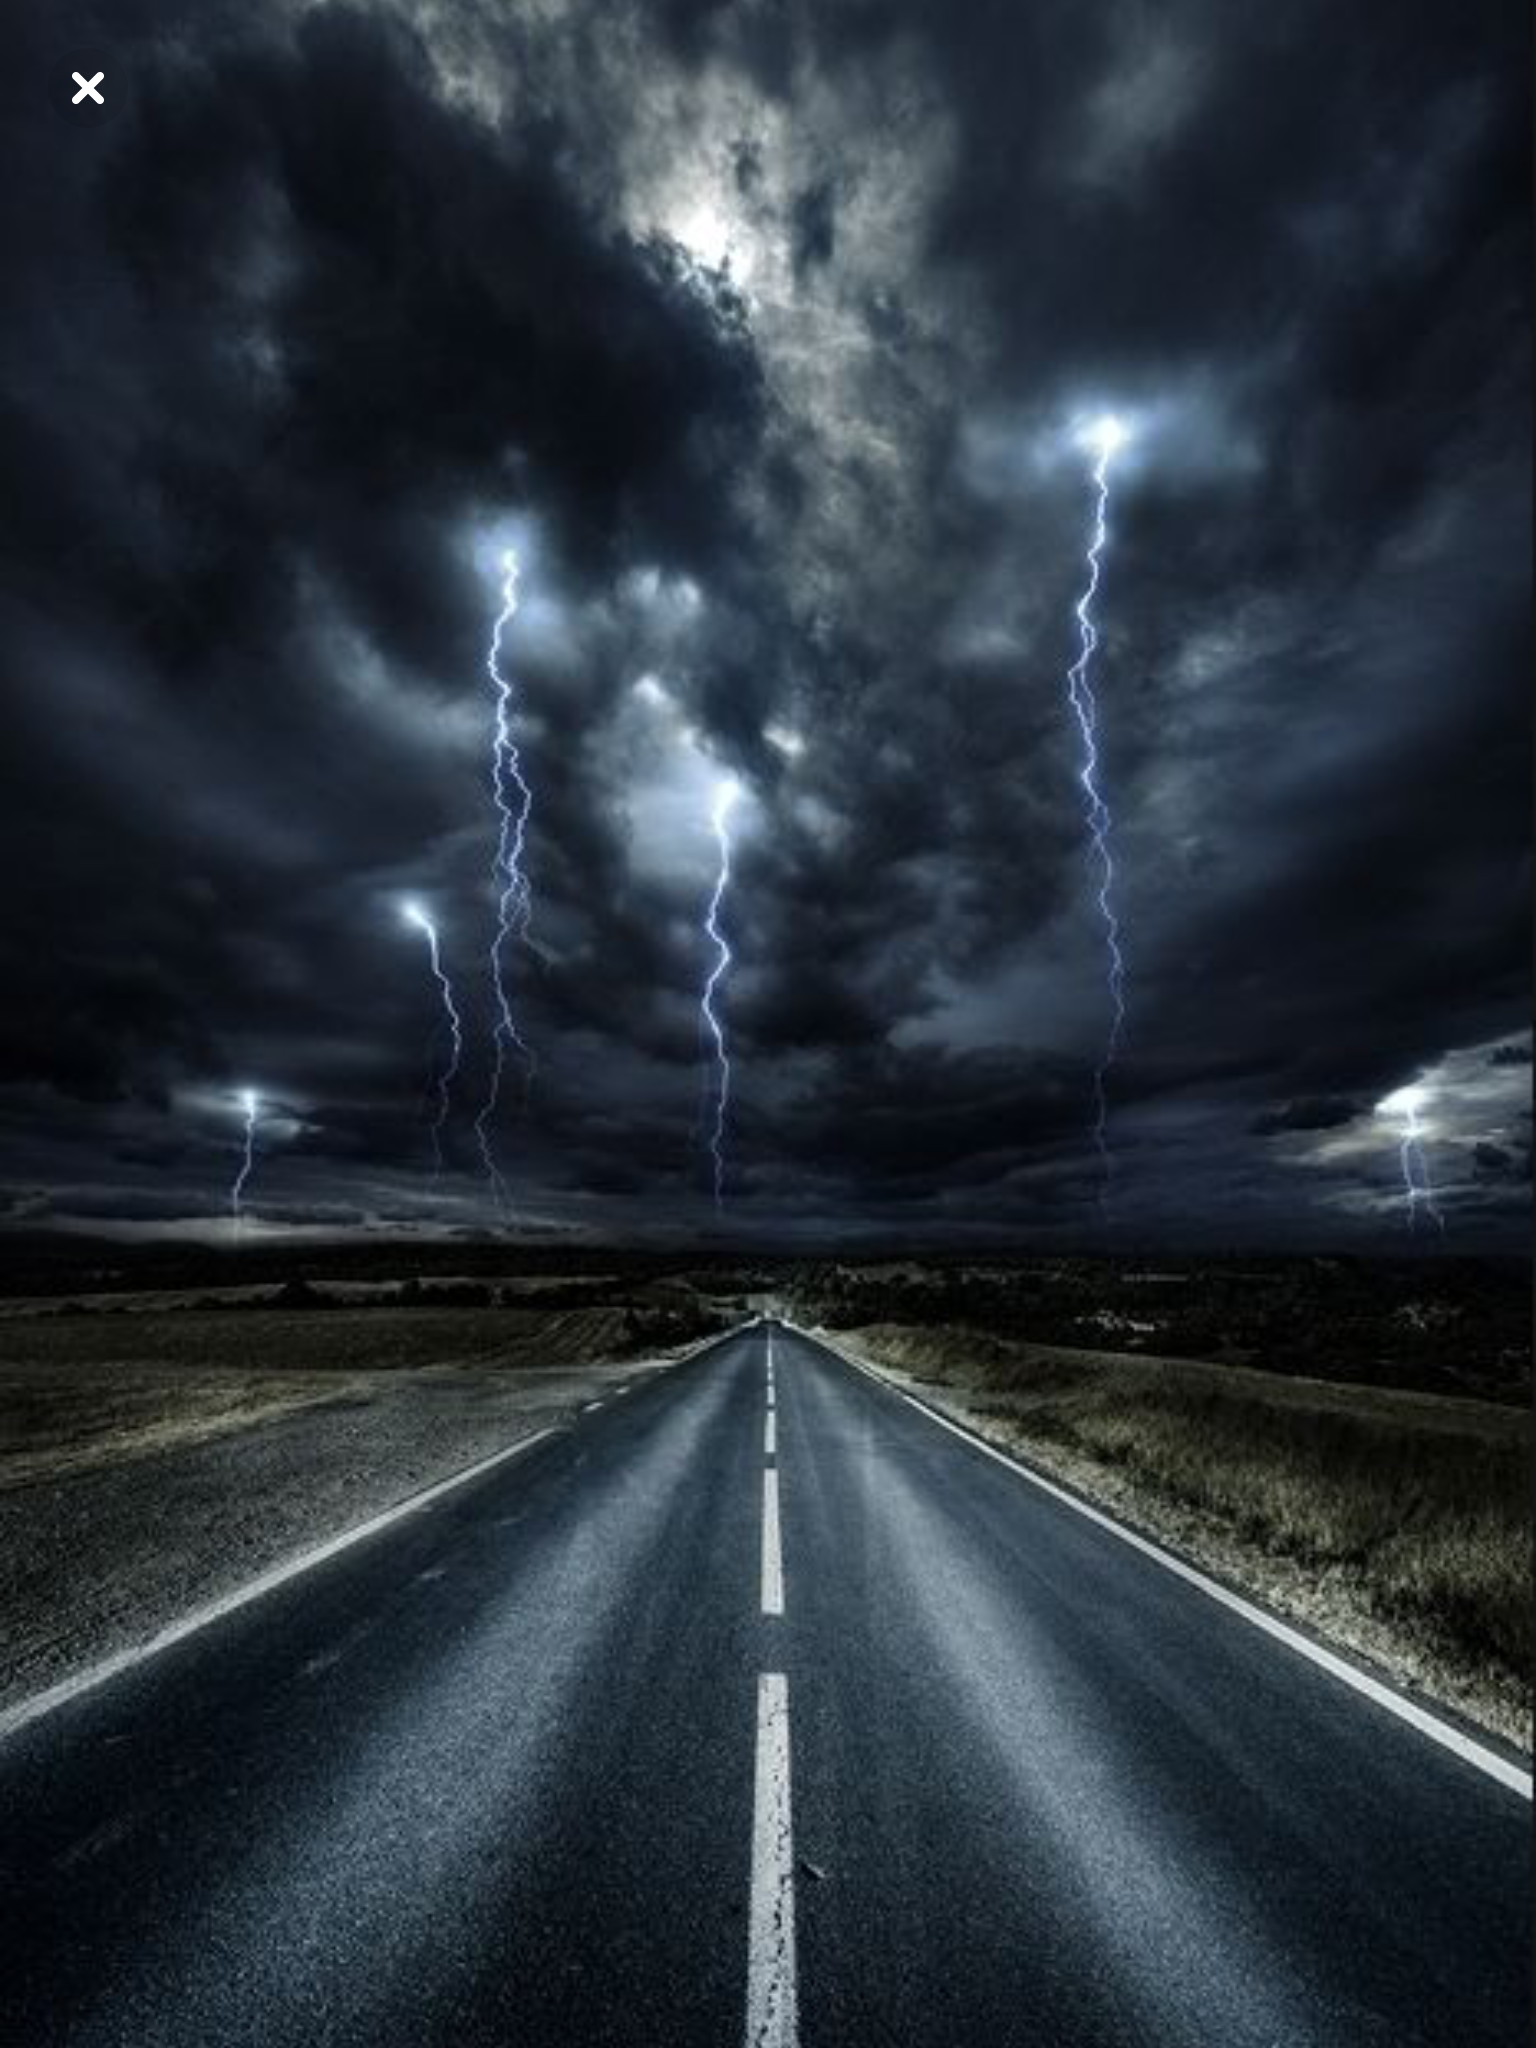 Whoa, lightning ahead #nature #travel | nature! | Pinterest ...